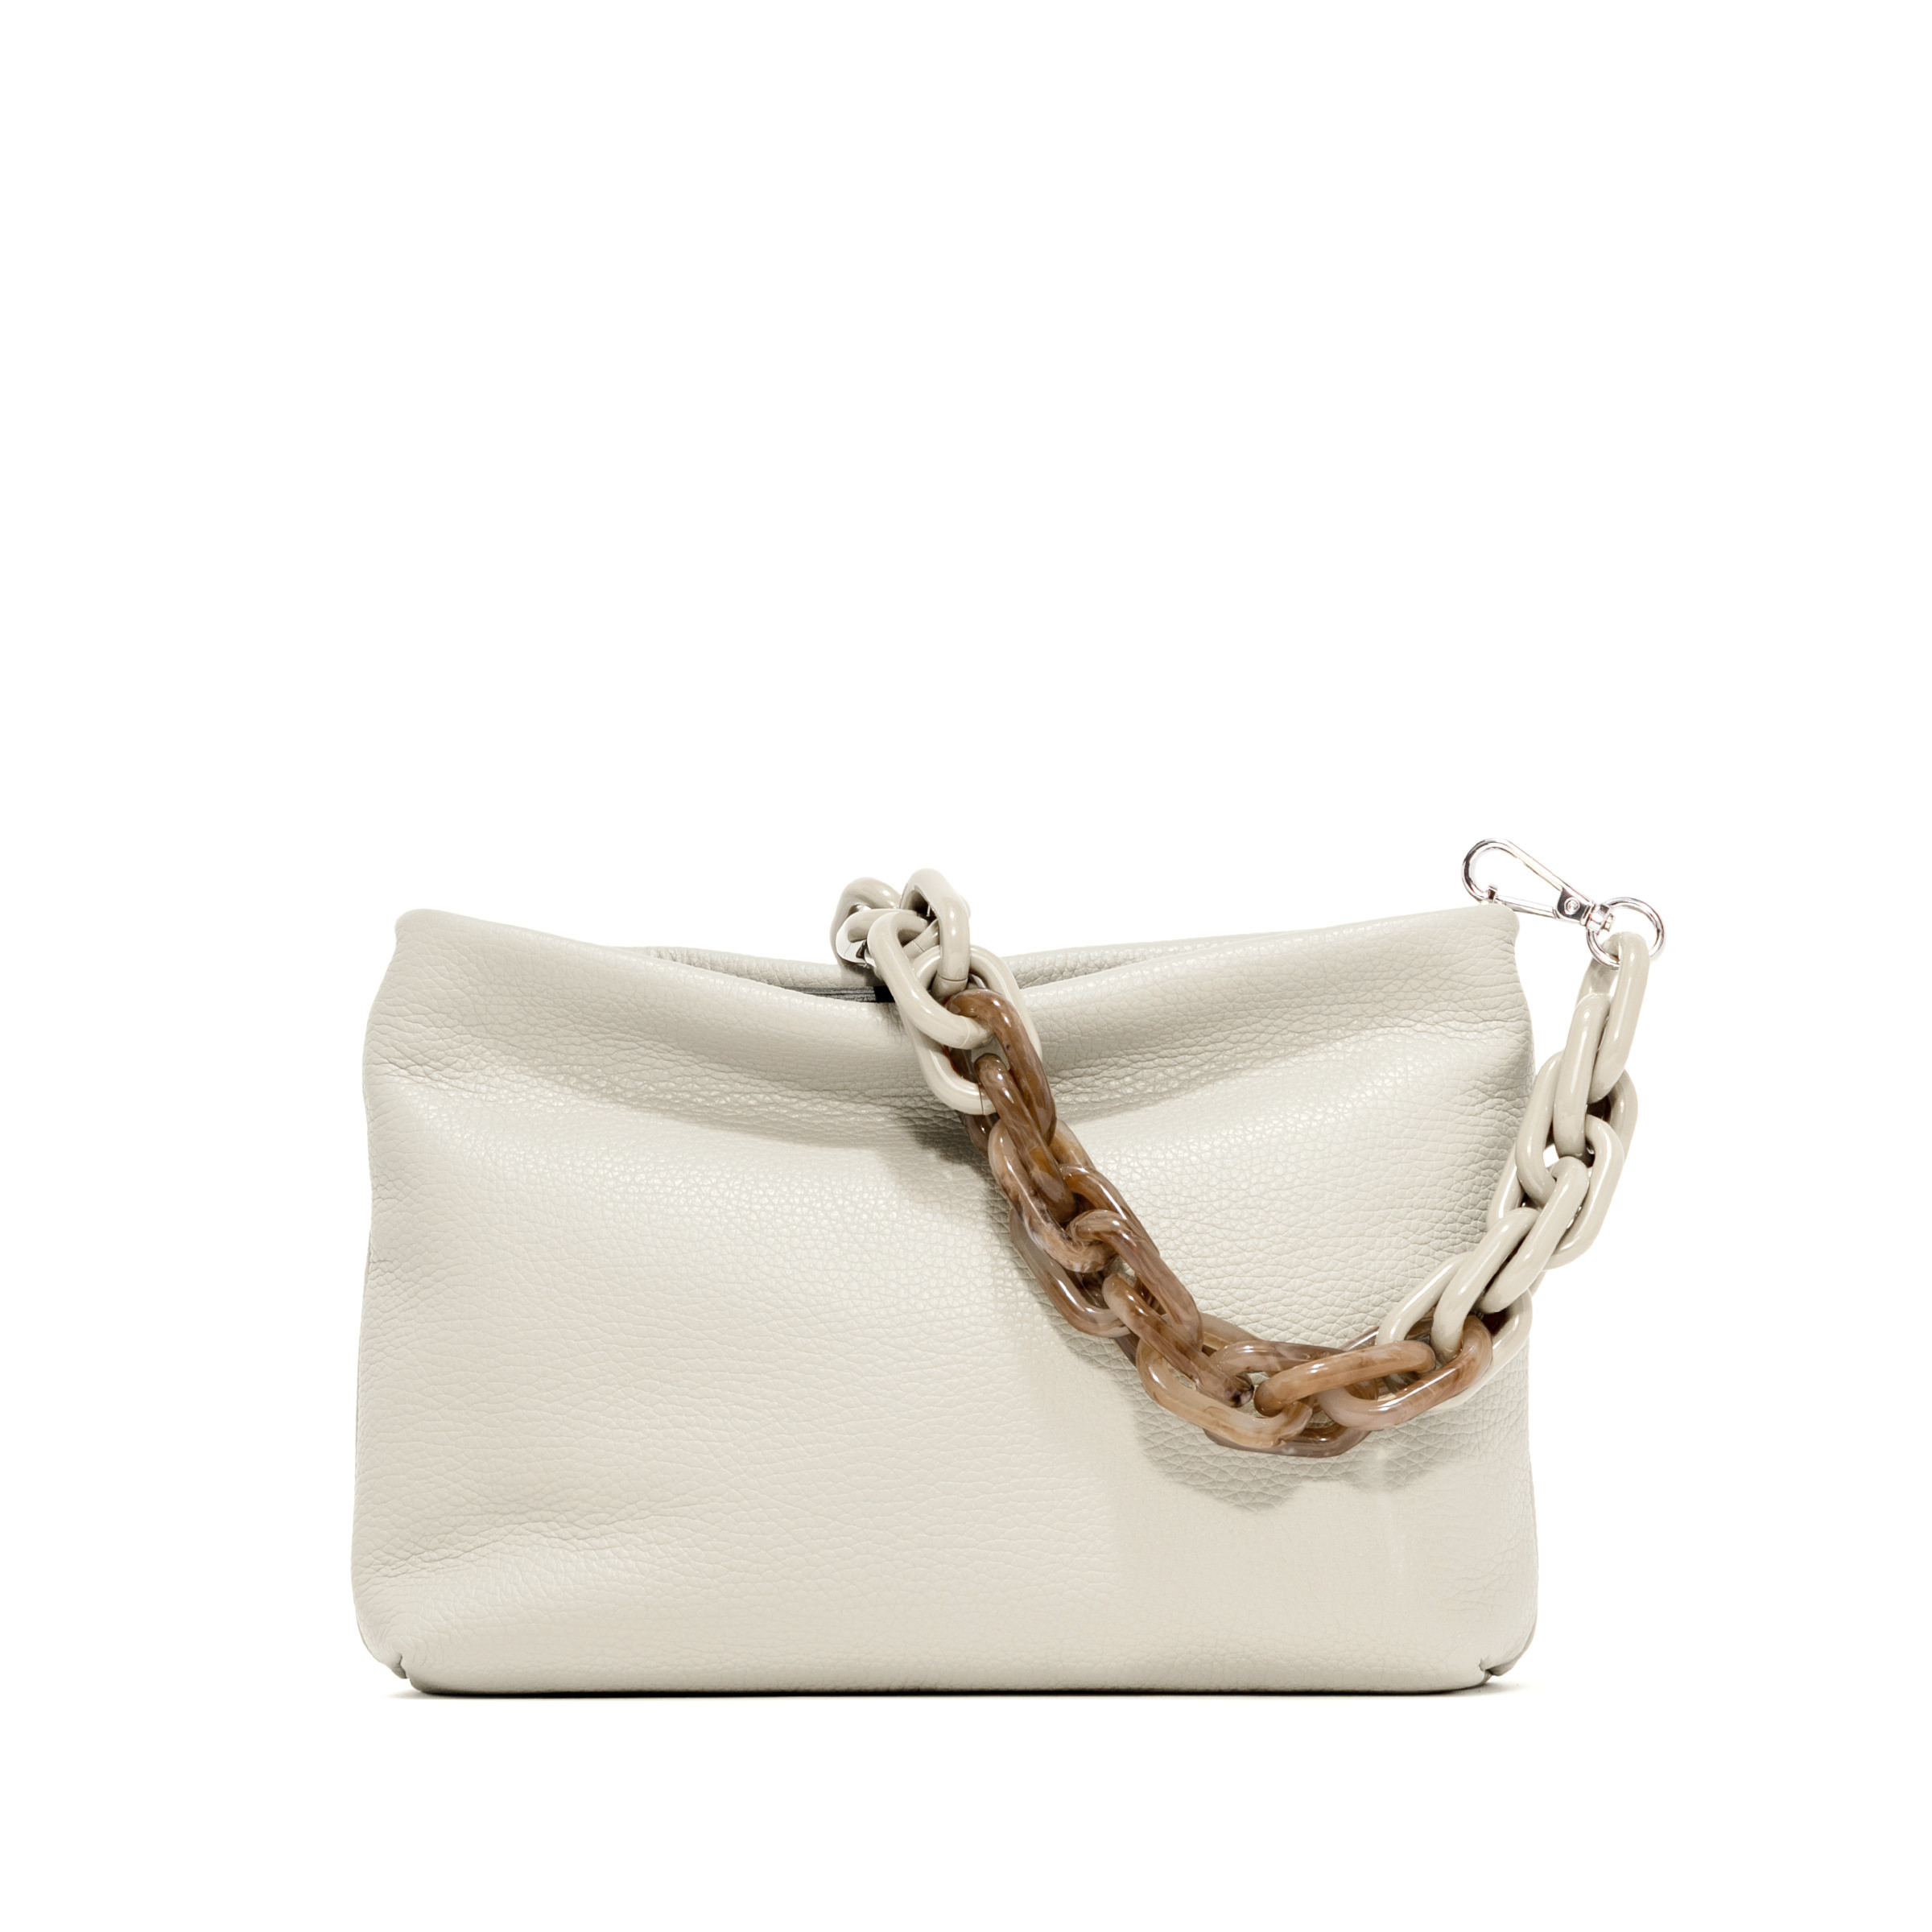 Gianni Chiarini - Brenda leather bag, White, large image number 0